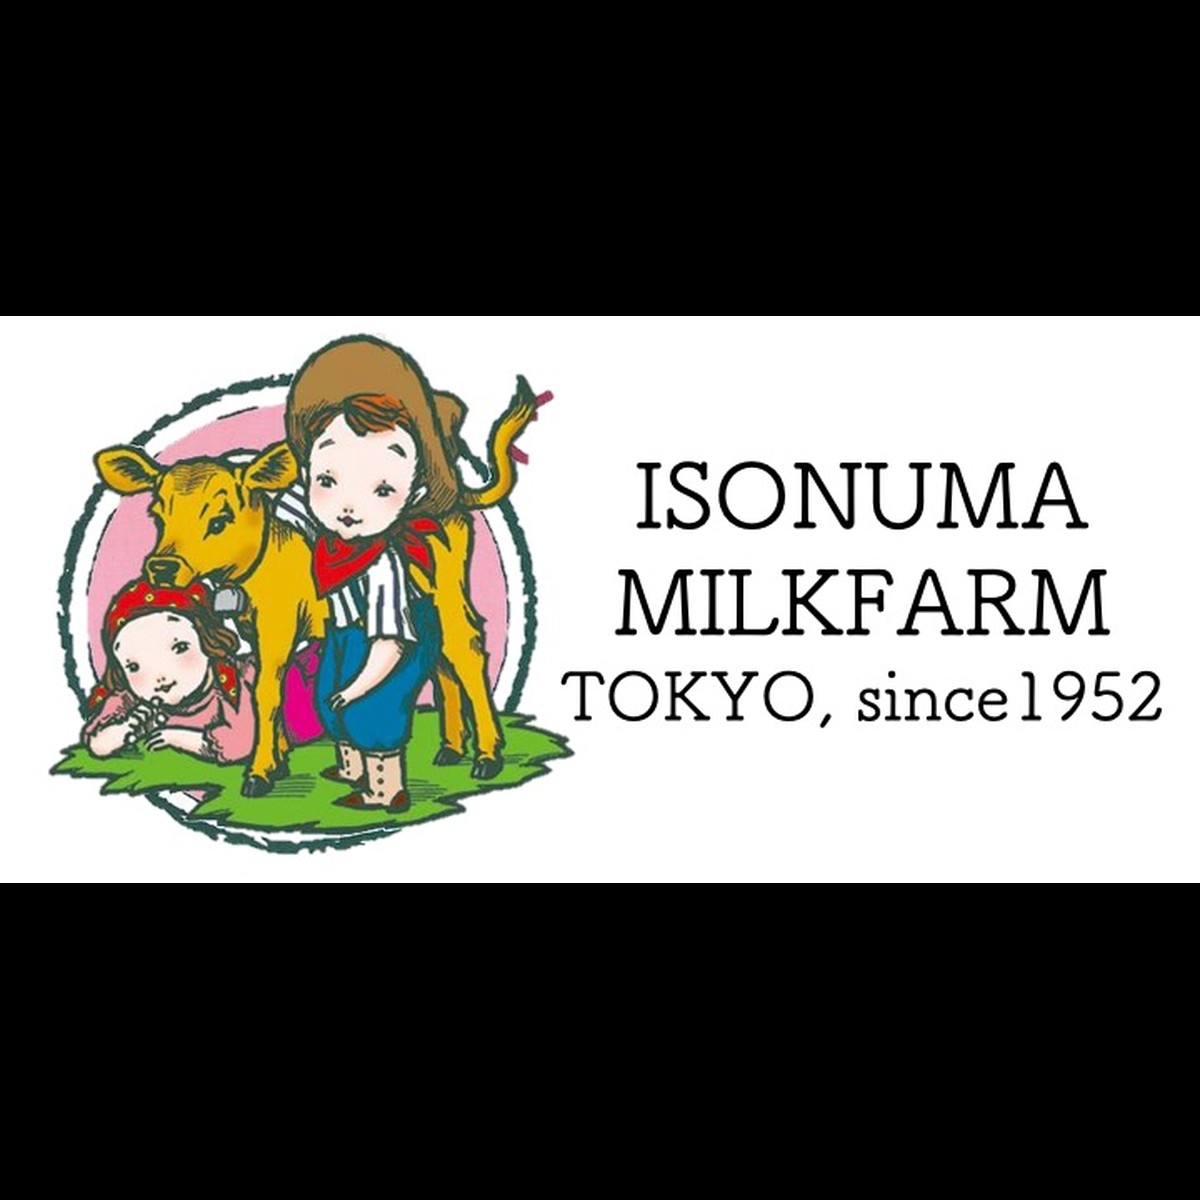 About Isonuma Milkfarm